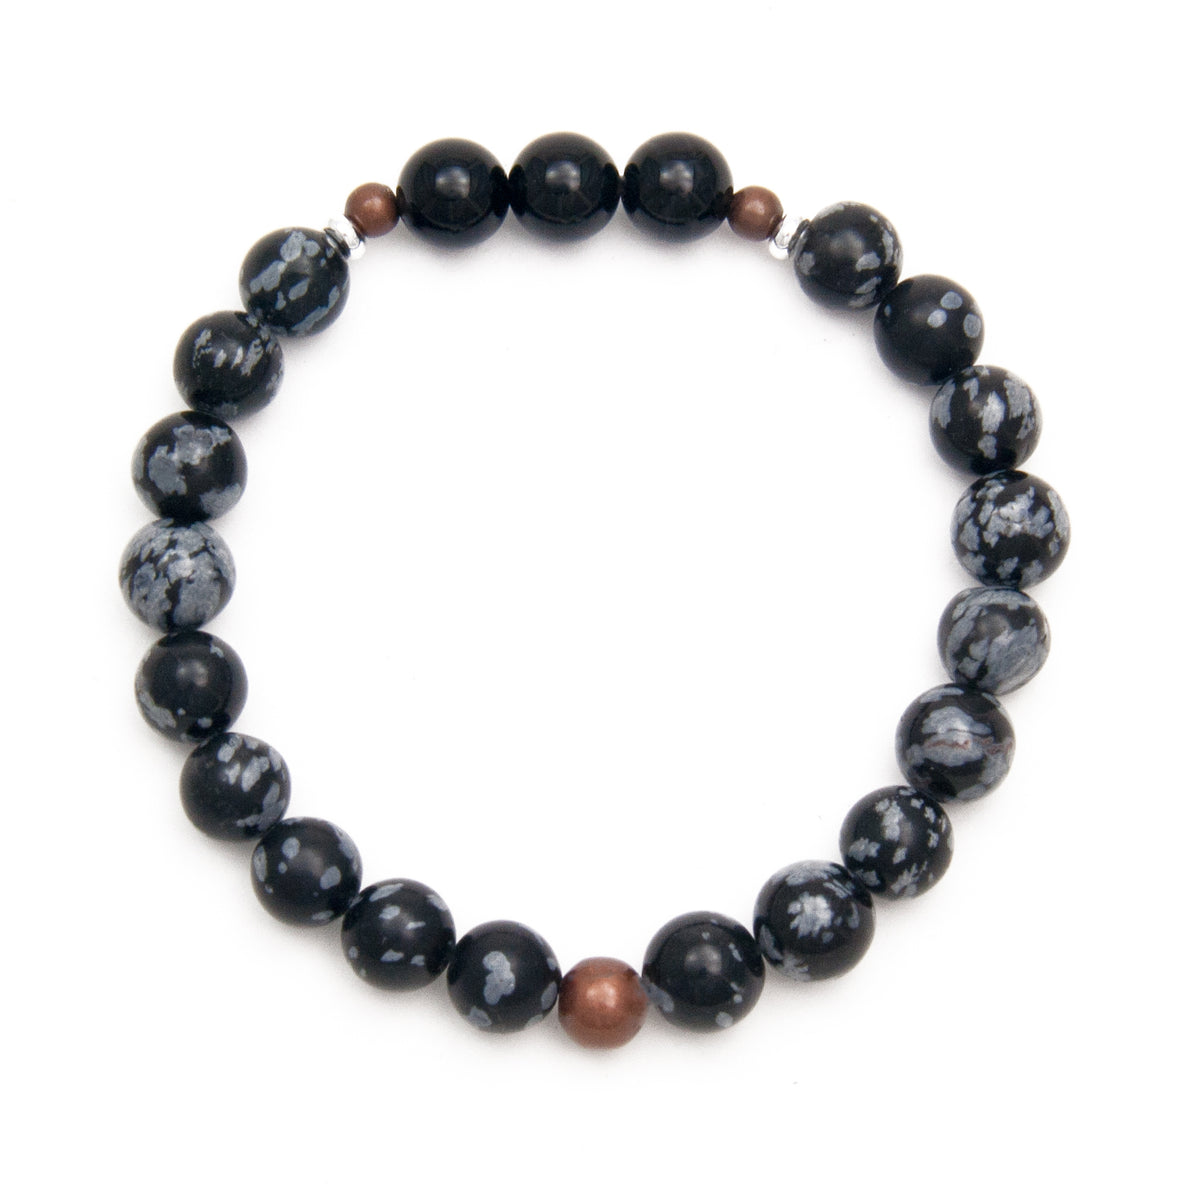 Black Tourmaline Stone Bracelet - Dünya Doğal Taş - Wholesale Natural Stone